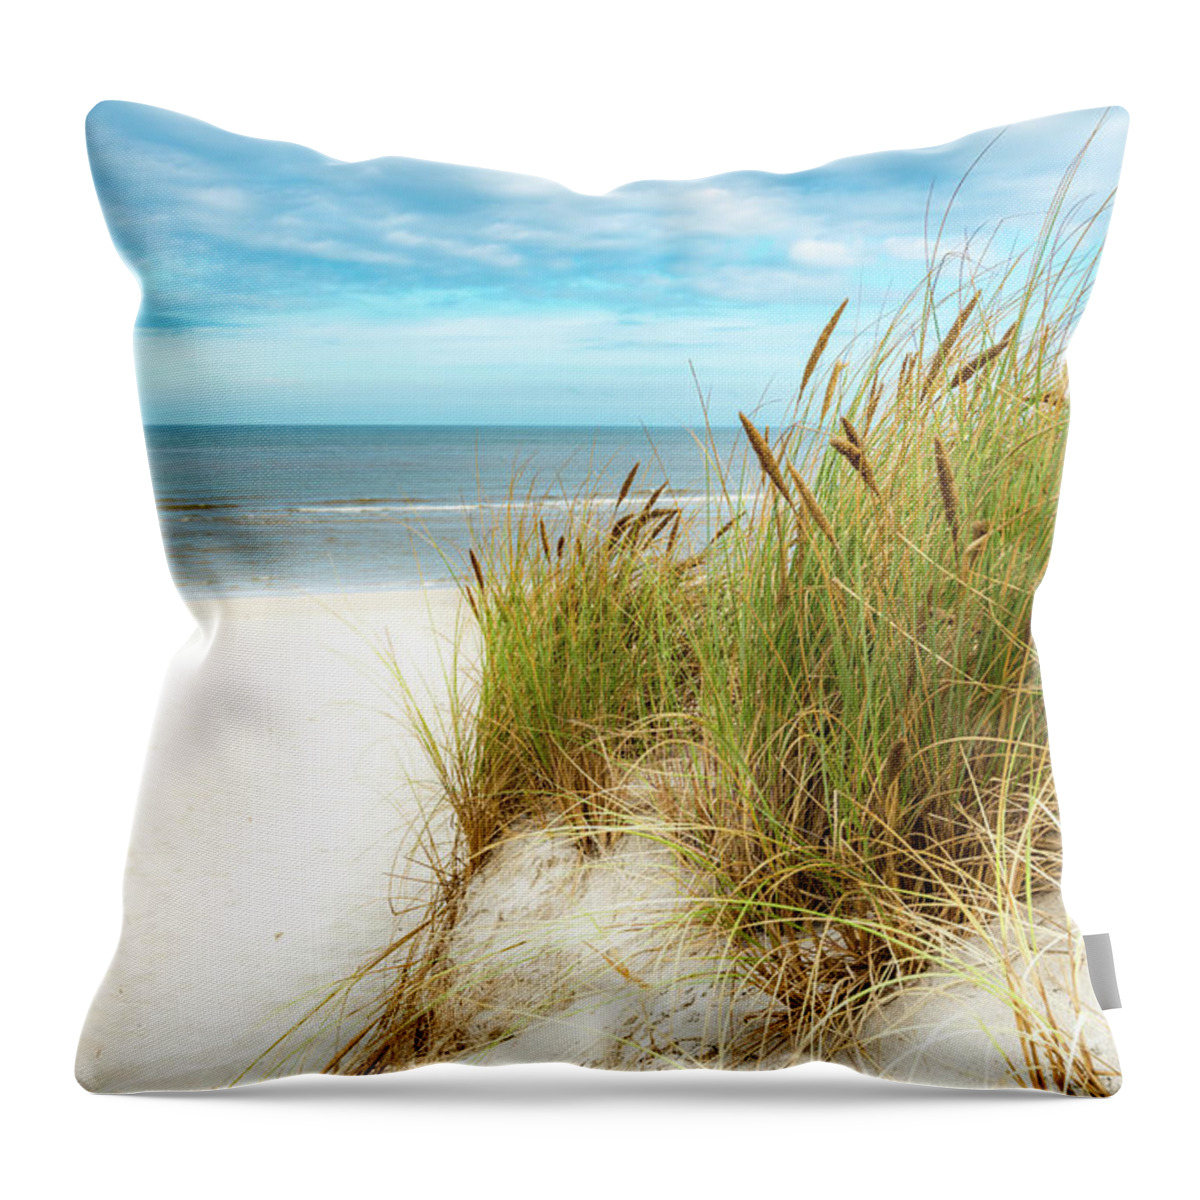 Europe Throw Pillow featuring the photograph Beach Grass #2 by Hannes Cmarits